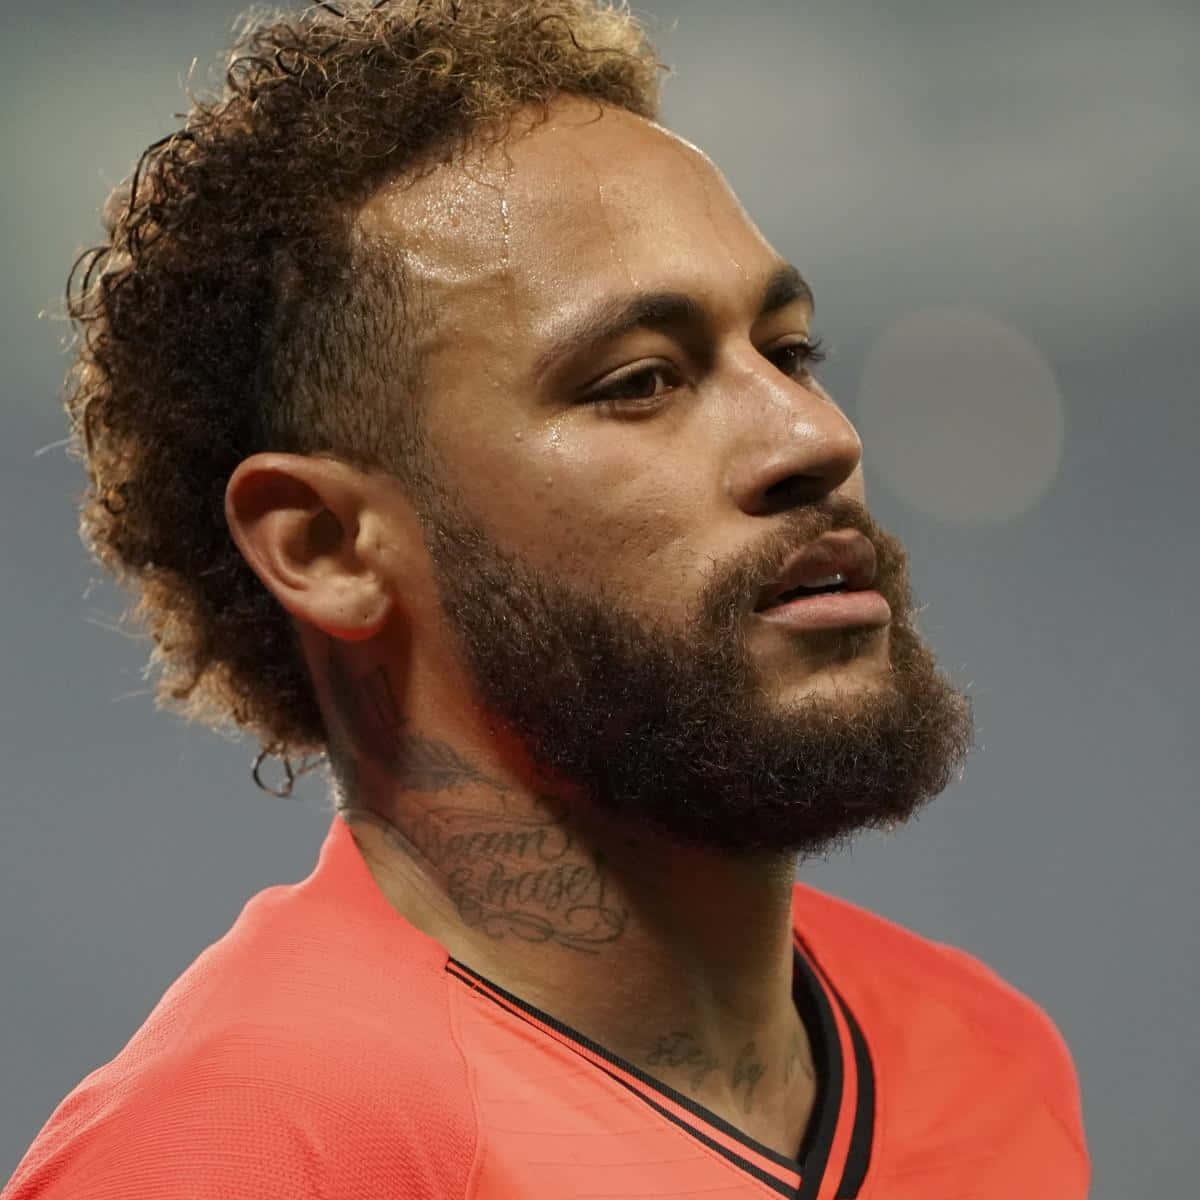 Neymar Profilewith Beard Wallpaper